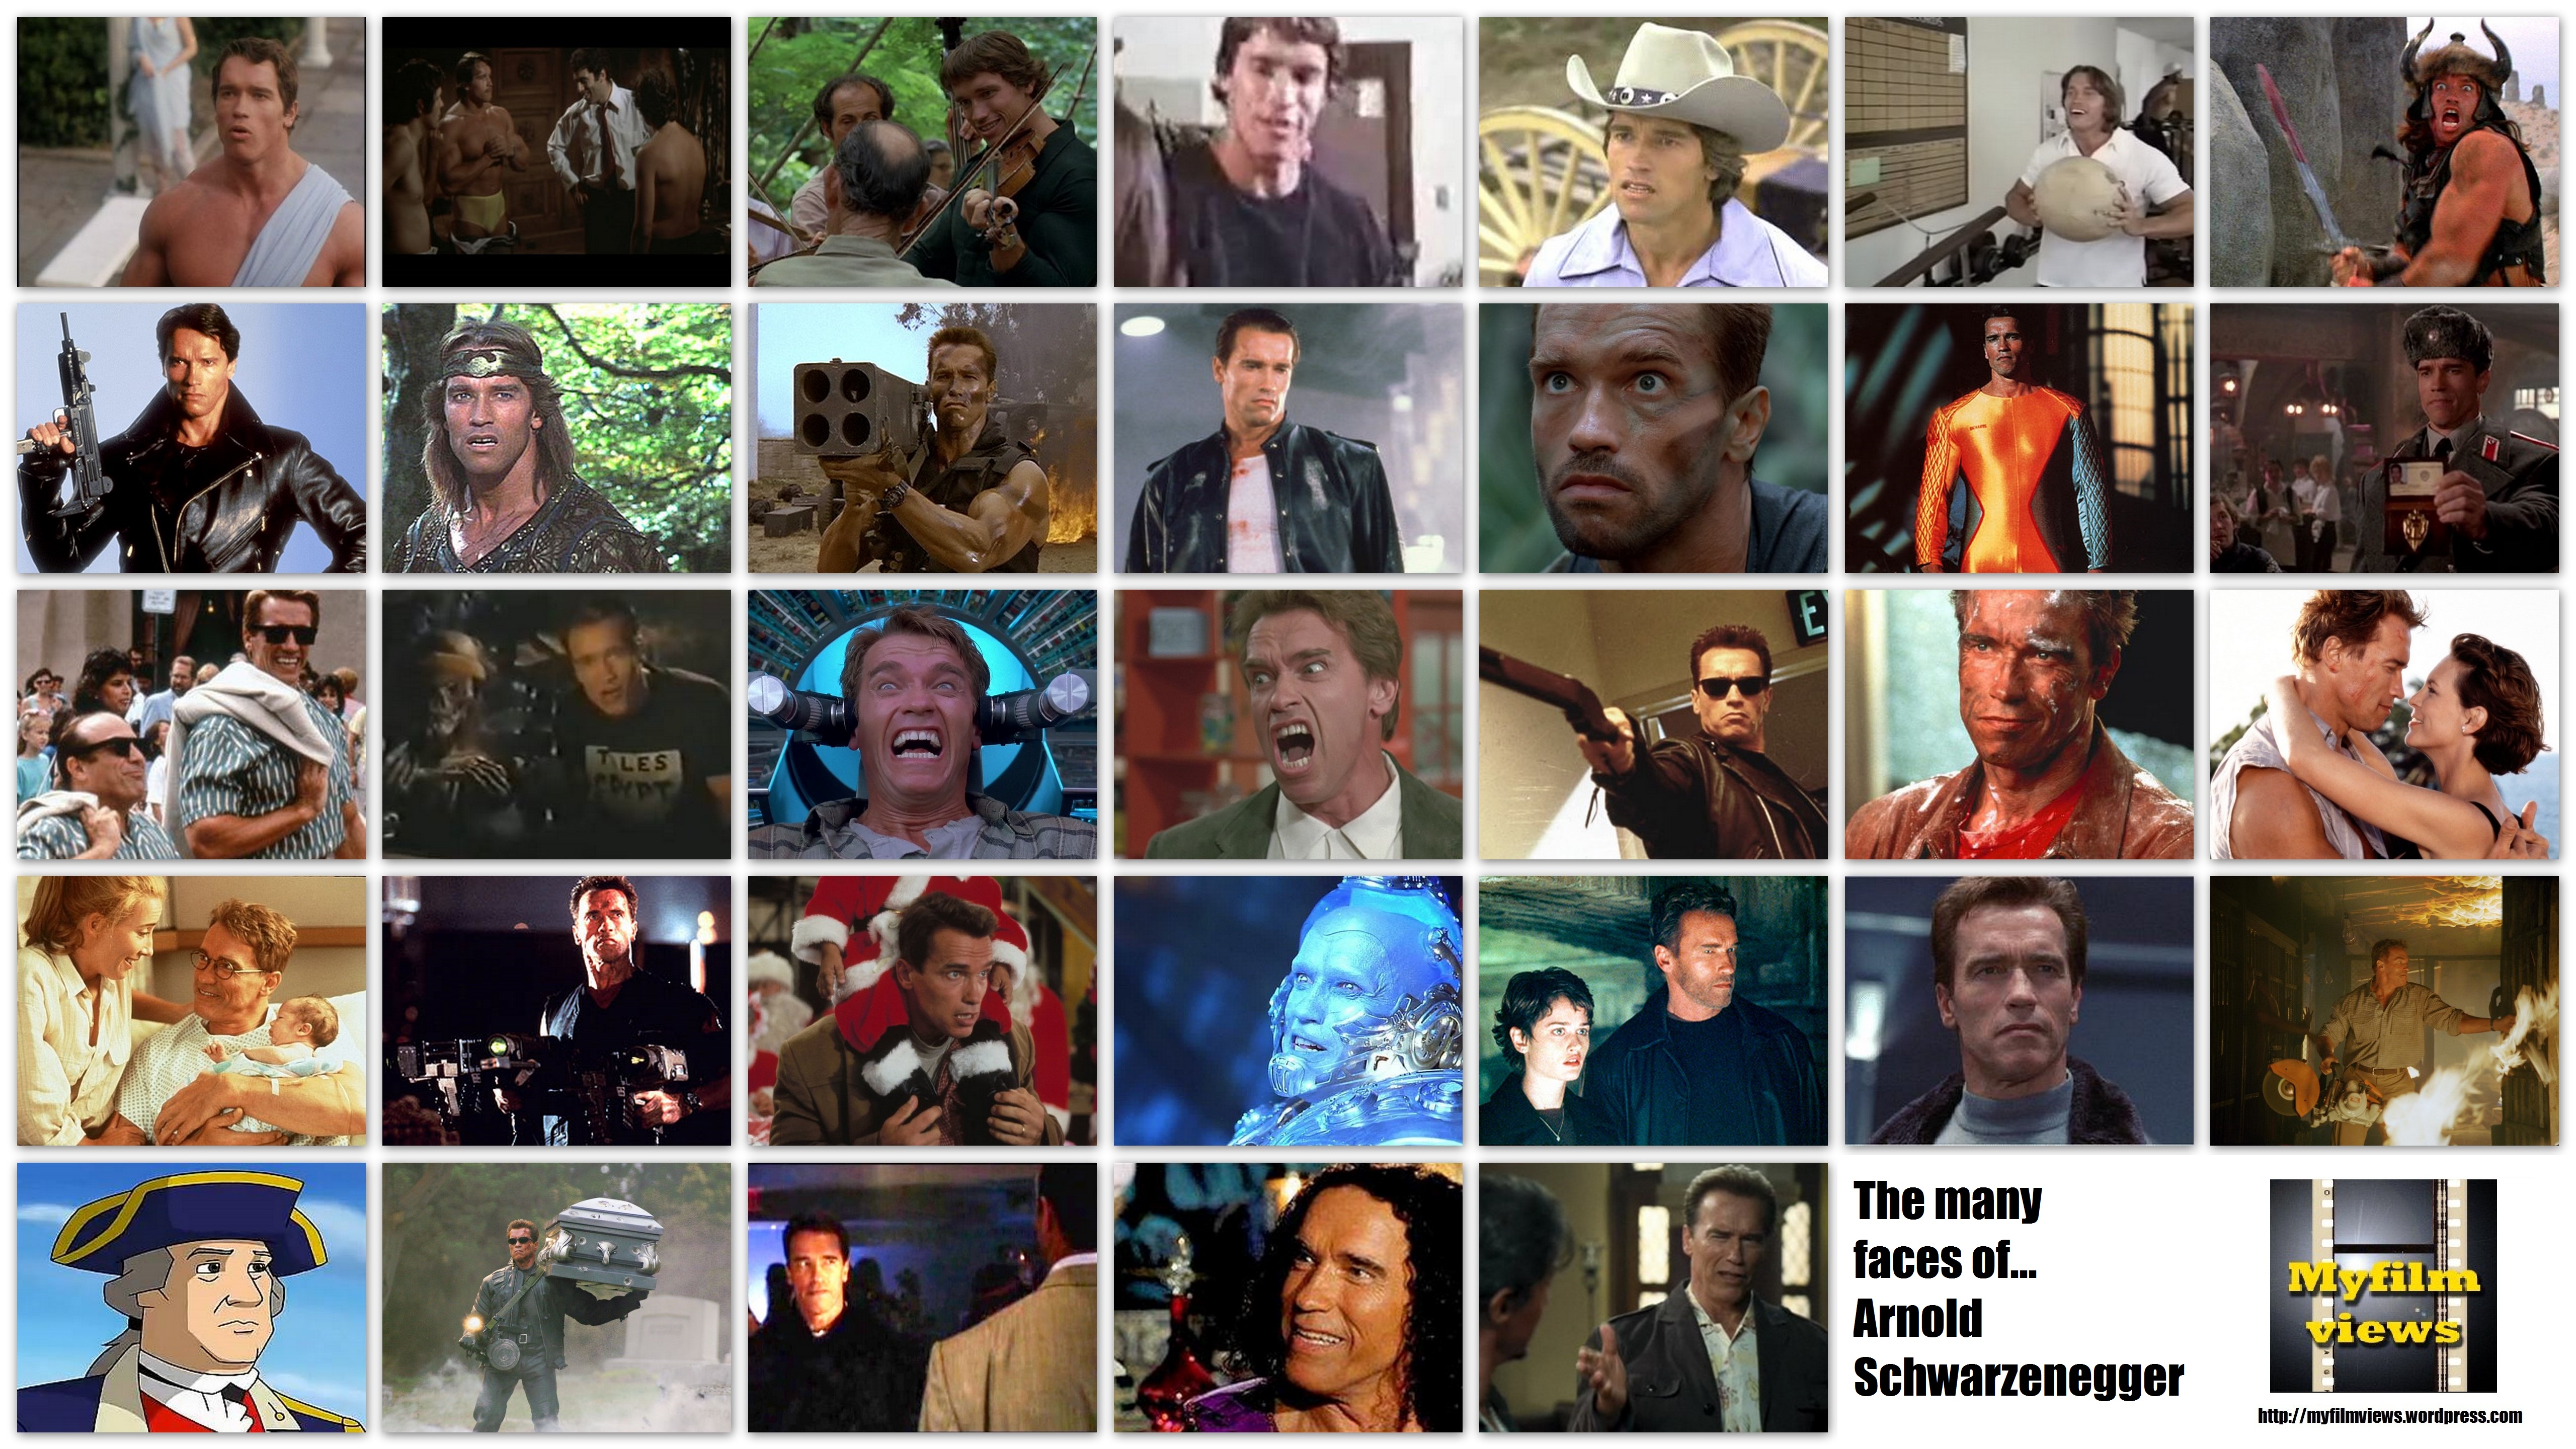 The Many Faces of... Arnold Schwarzenegger